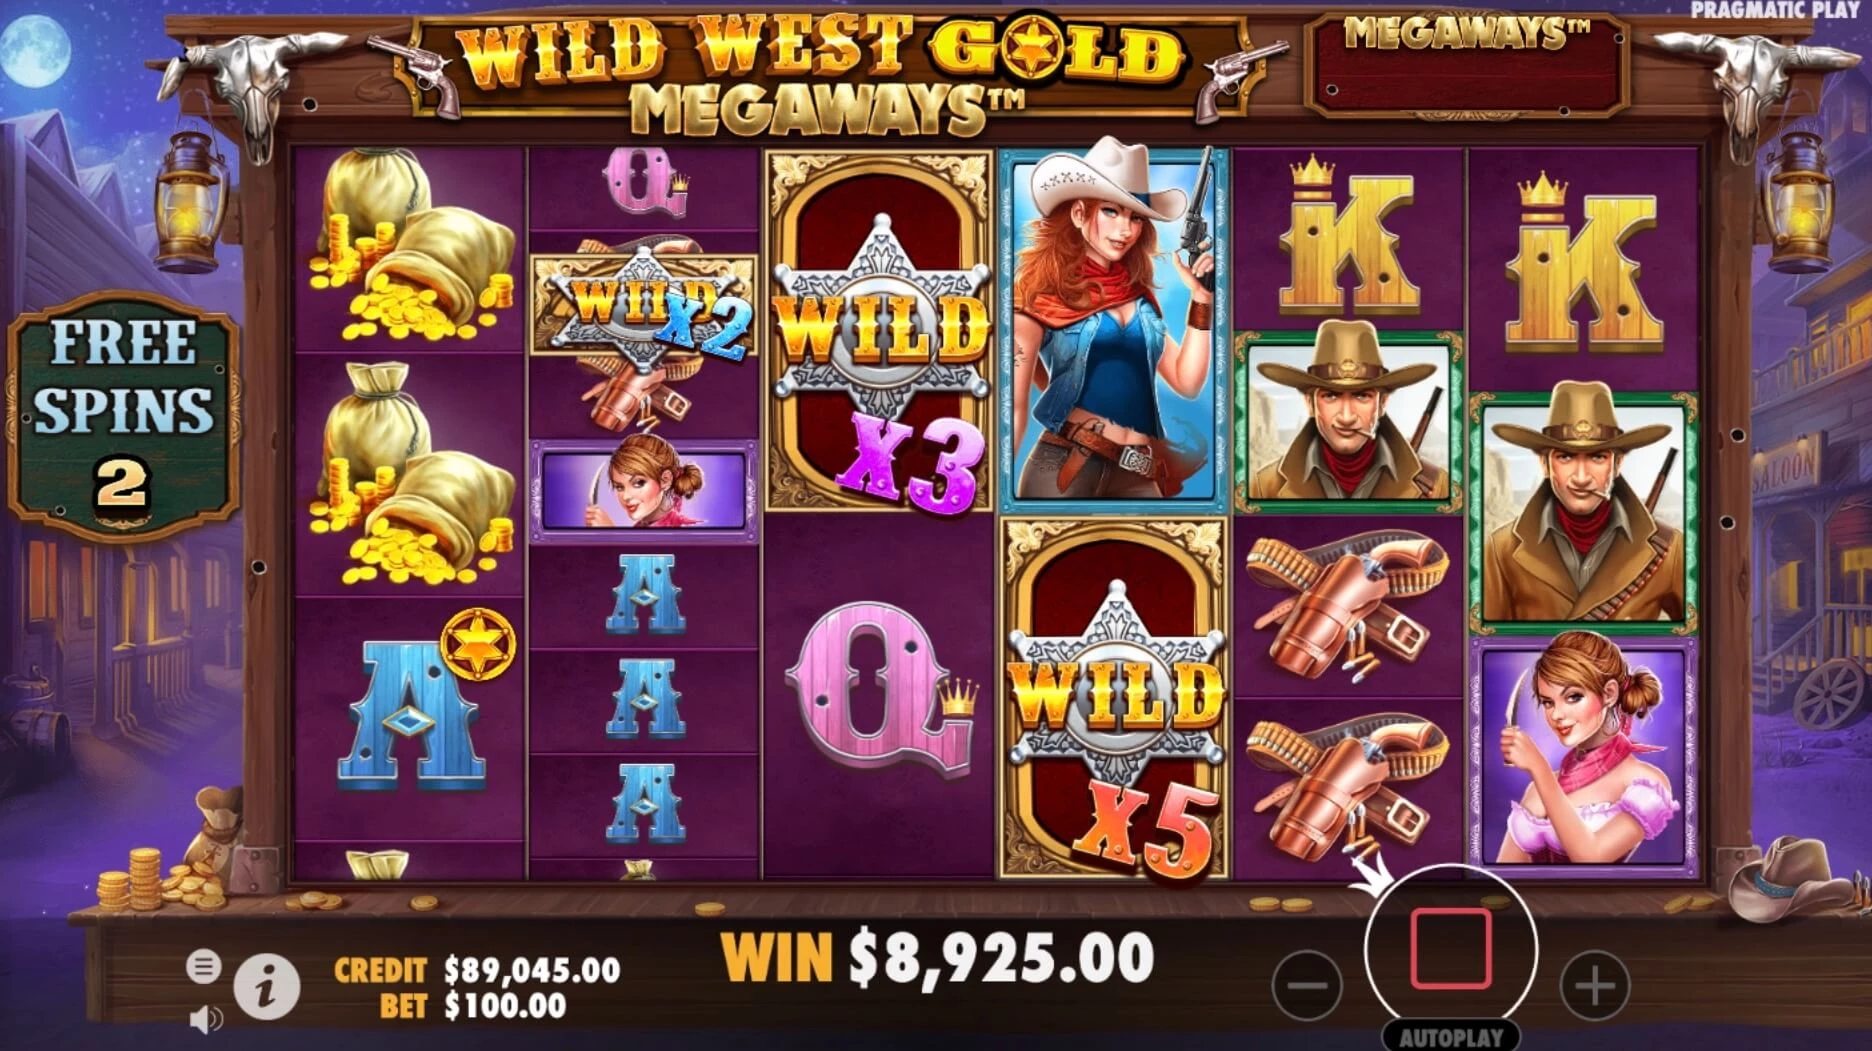 Wild West Gold Megaways win one